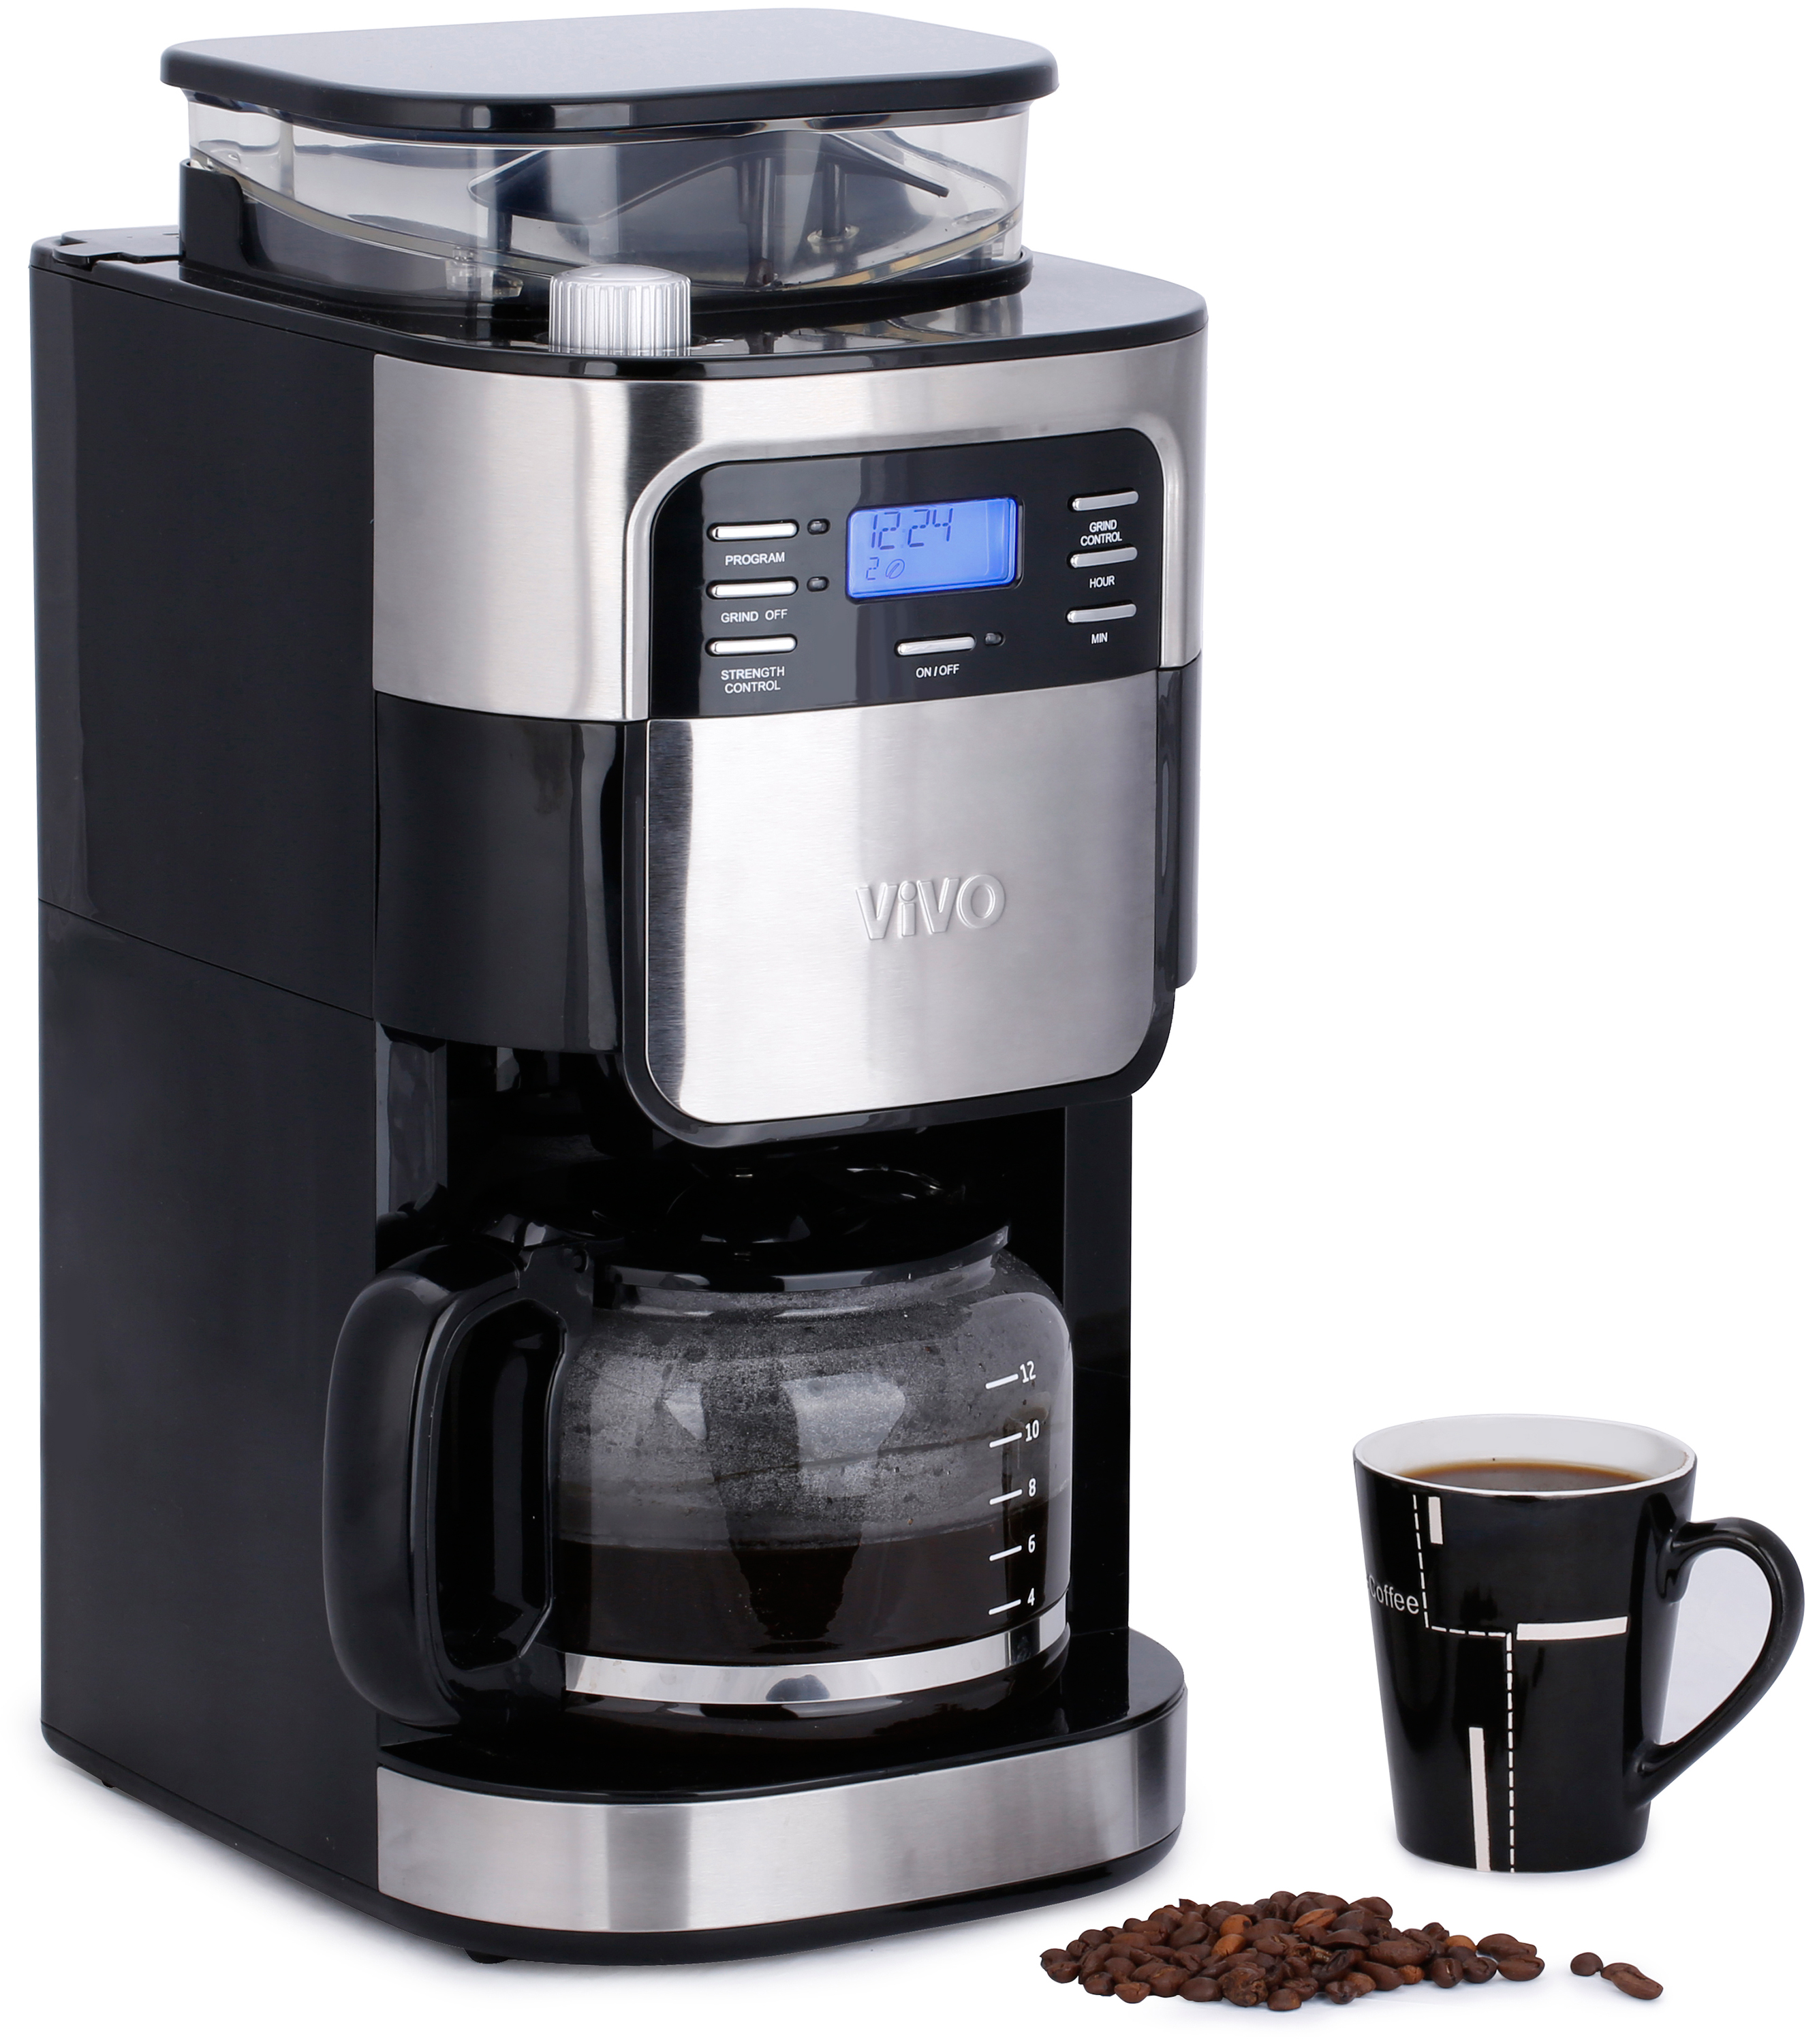 ViVo 1.5L Bean to Cup Digital Filter Coffee Maker Machine